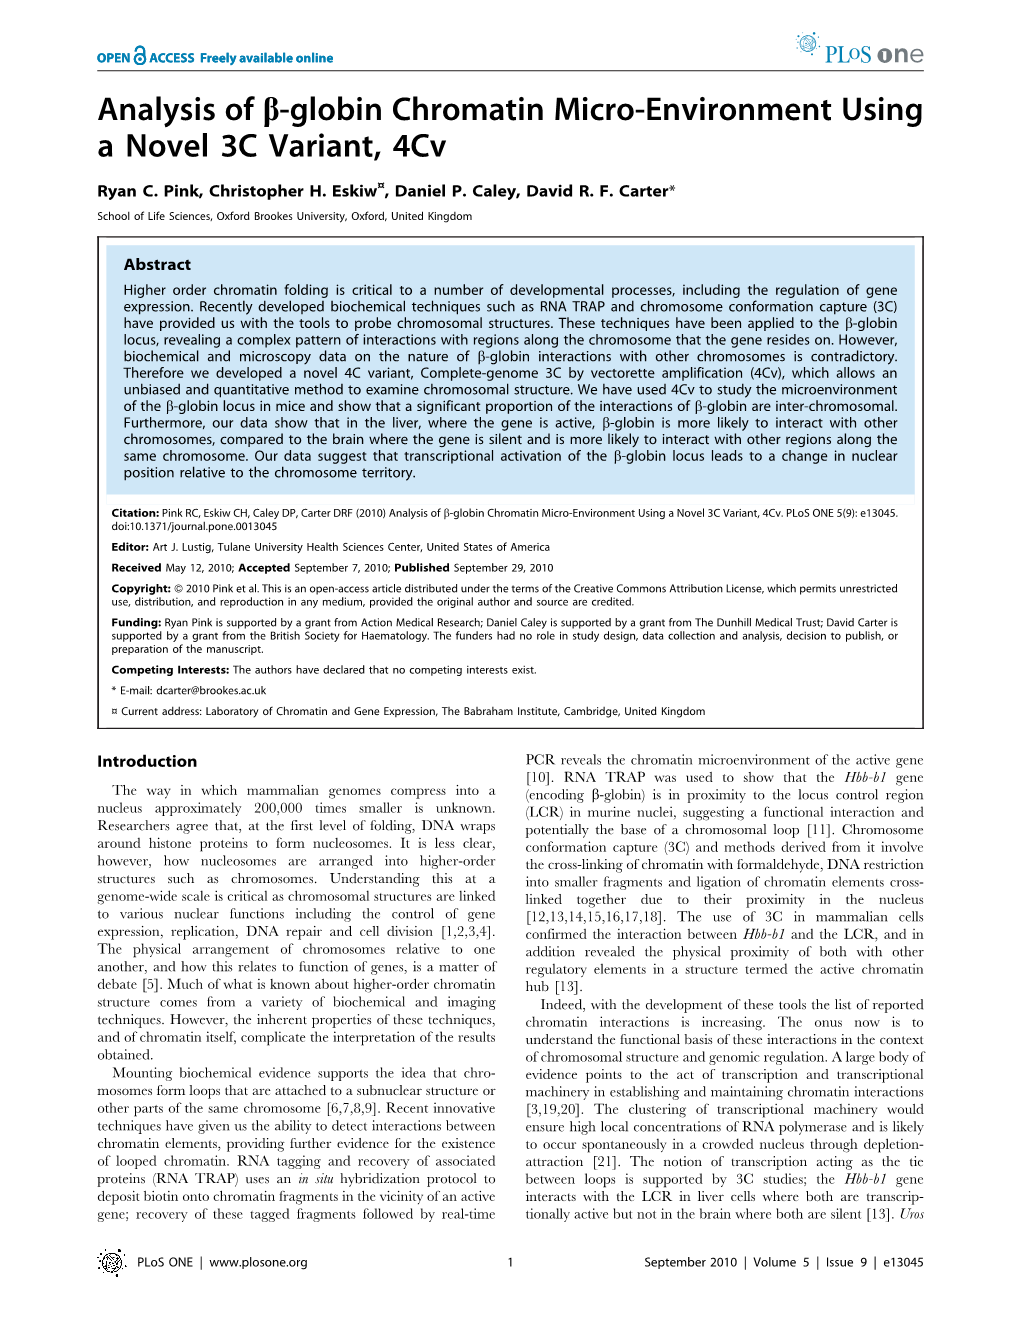 Analysis of B-Globin Chromatin Micro-Environment Using a Novel 3C Variant, 4Cv